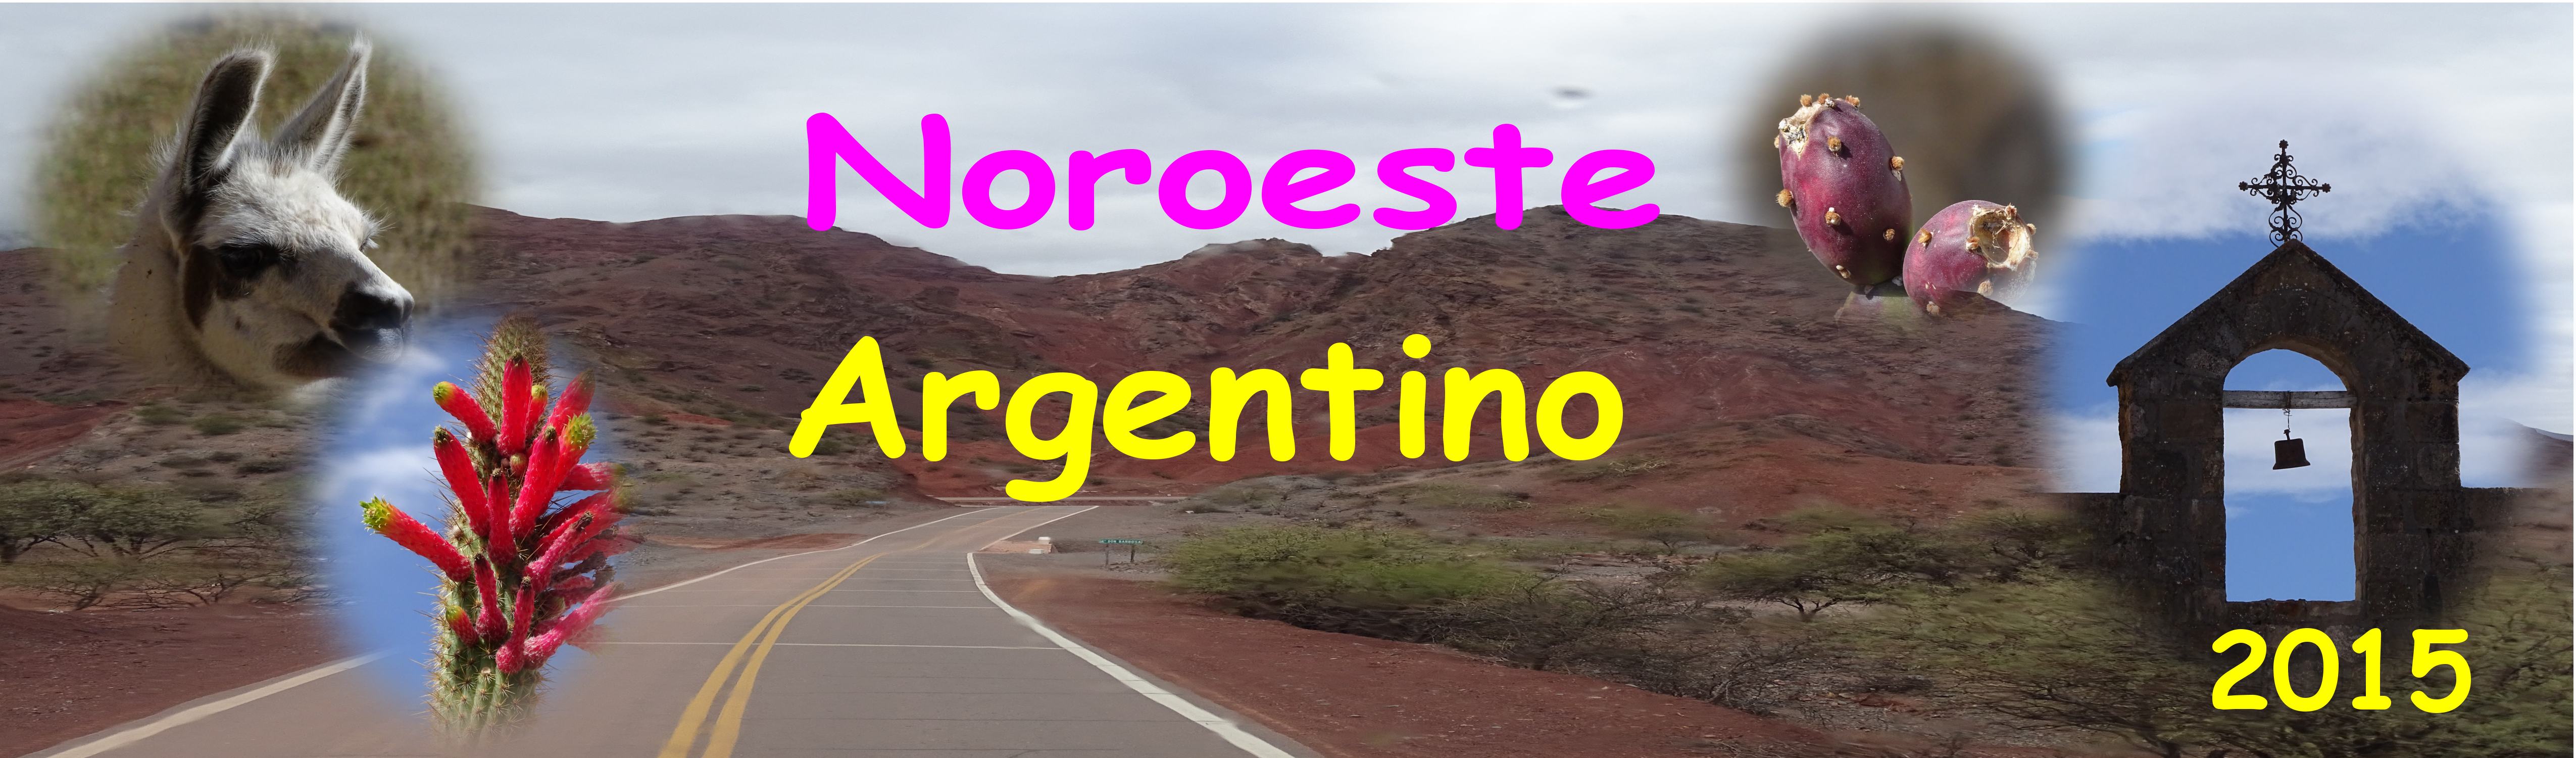 Noreste Argentino